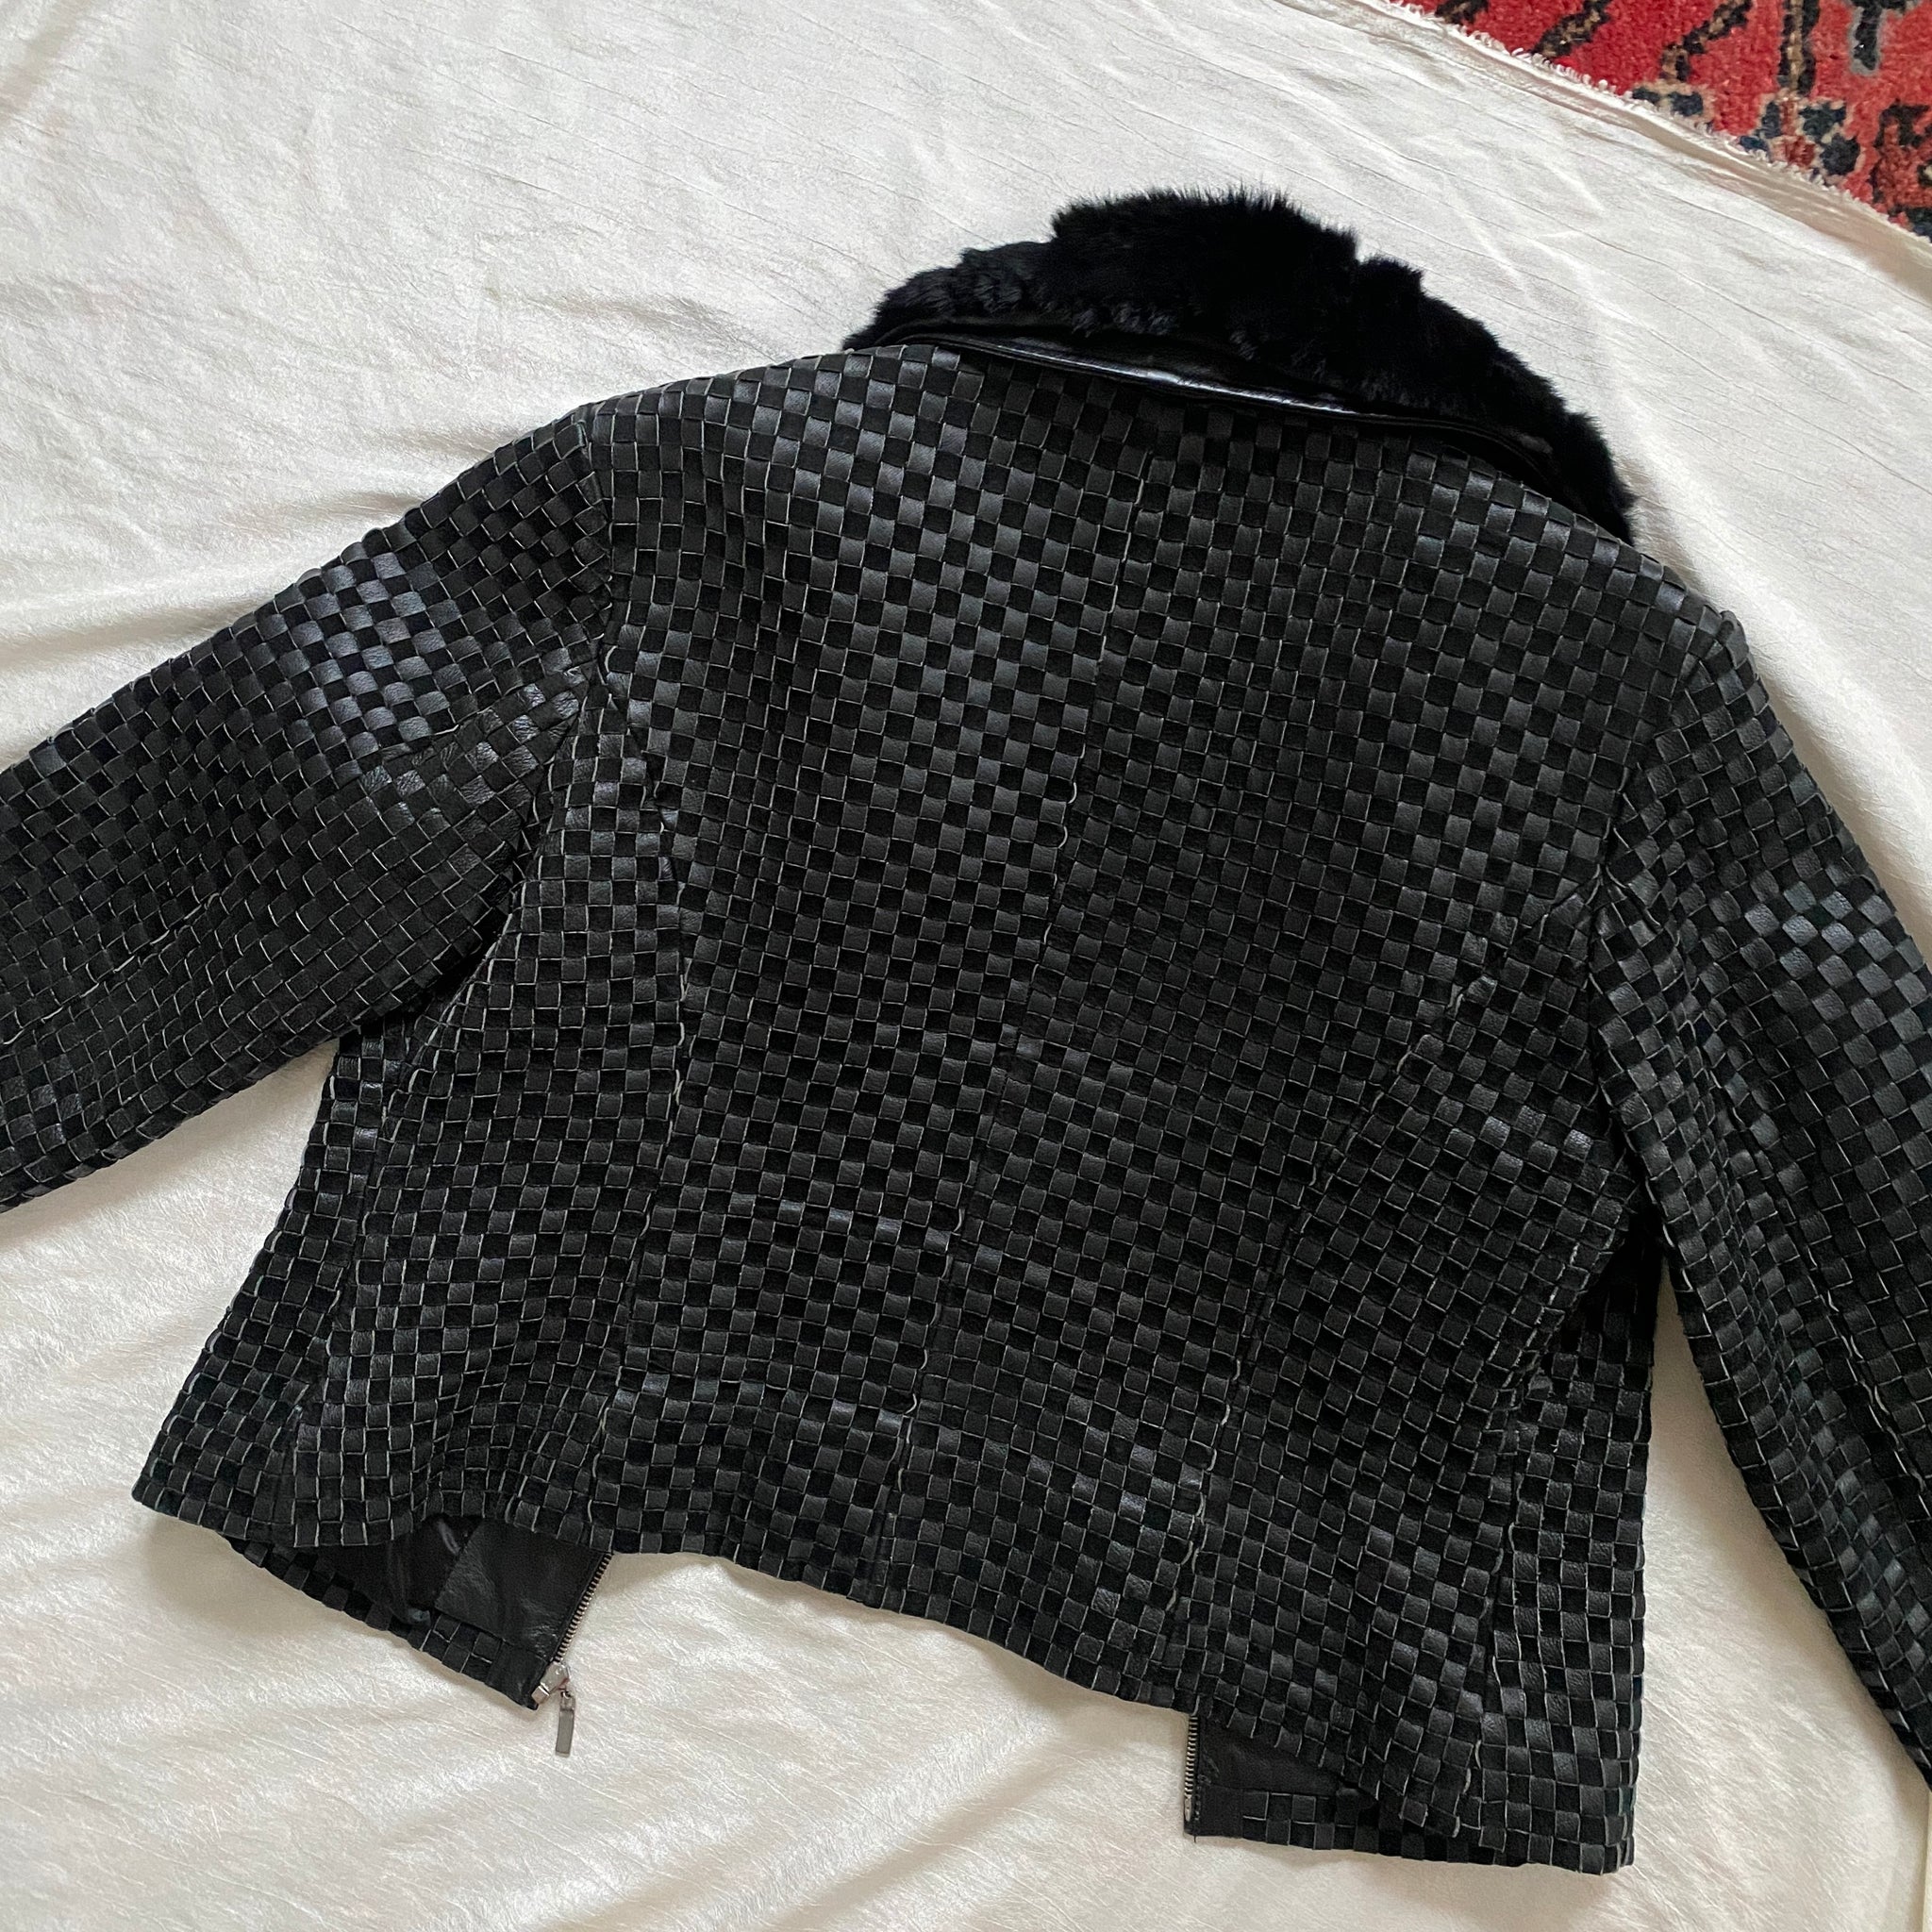 Woven Leather Jacket